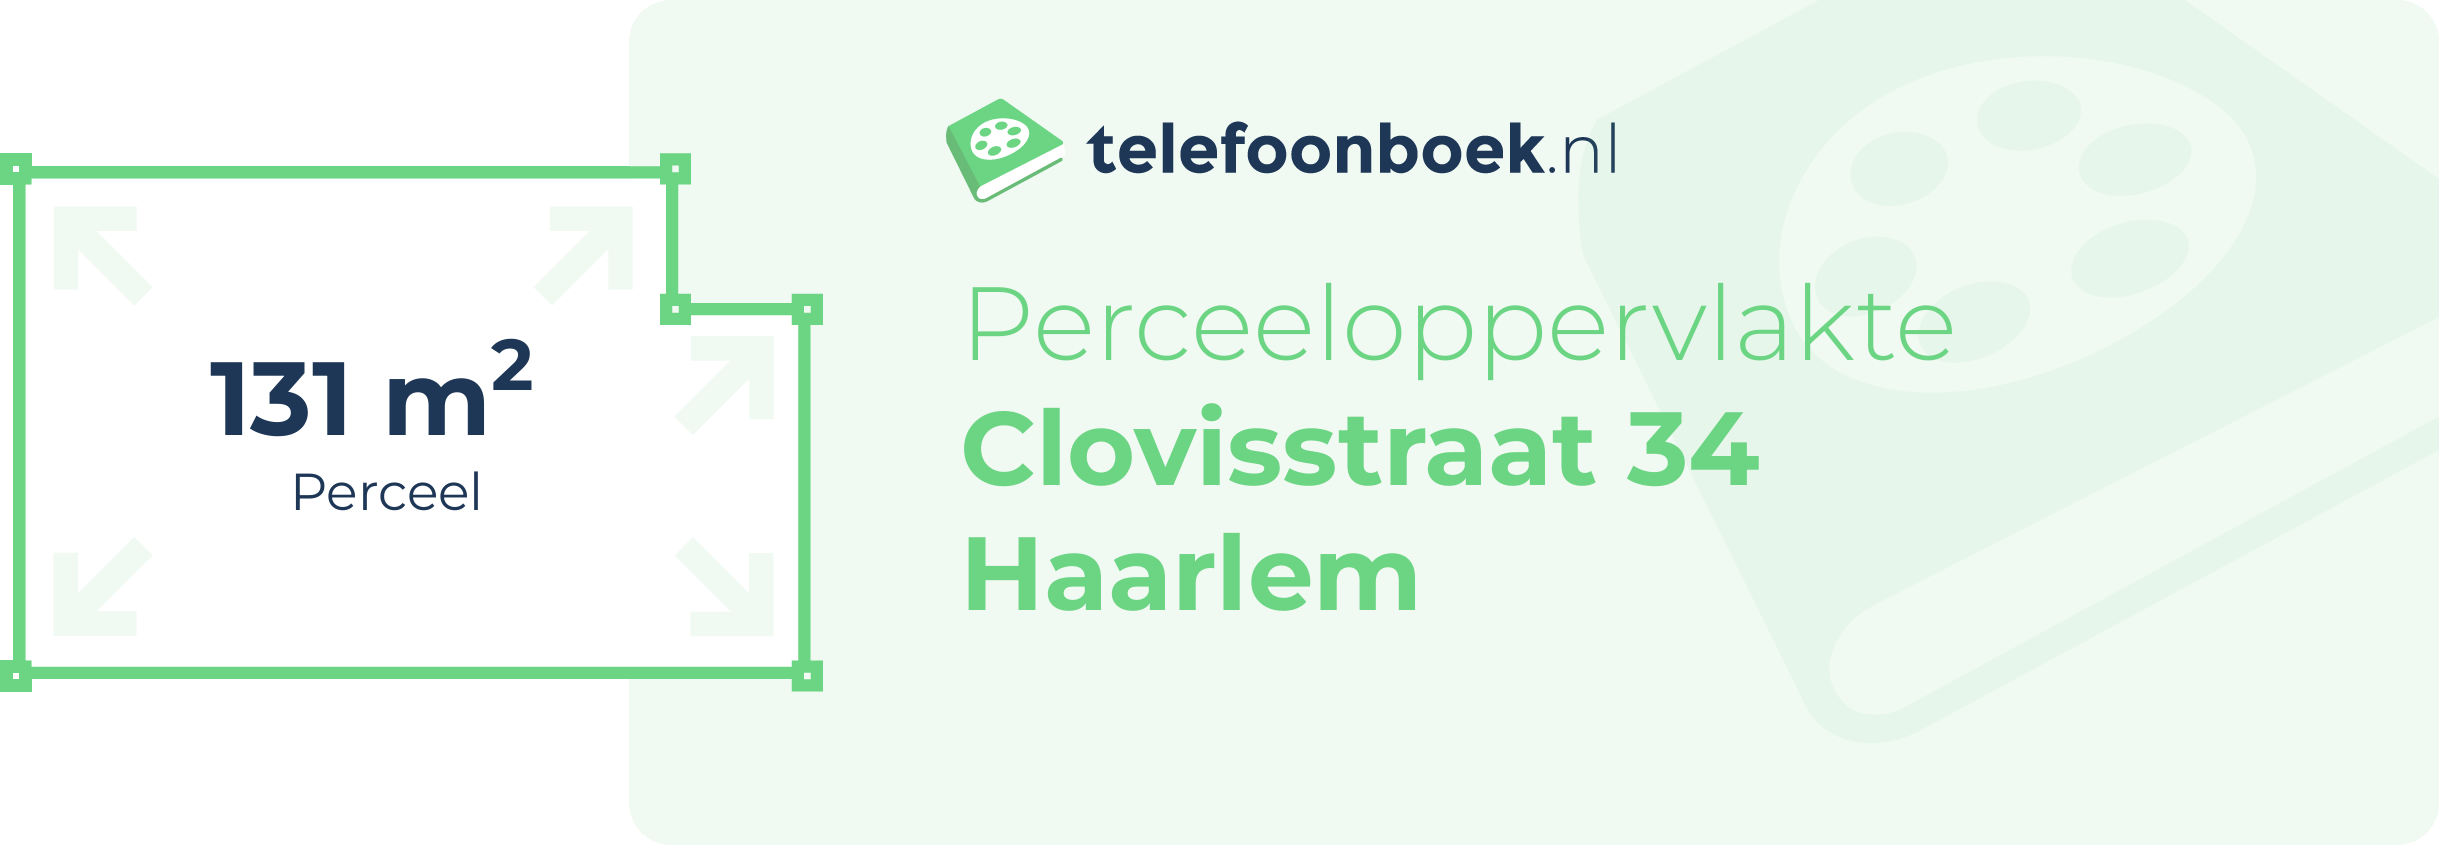 Perceeloppervlakte Clovisstraat 34 Haarlem